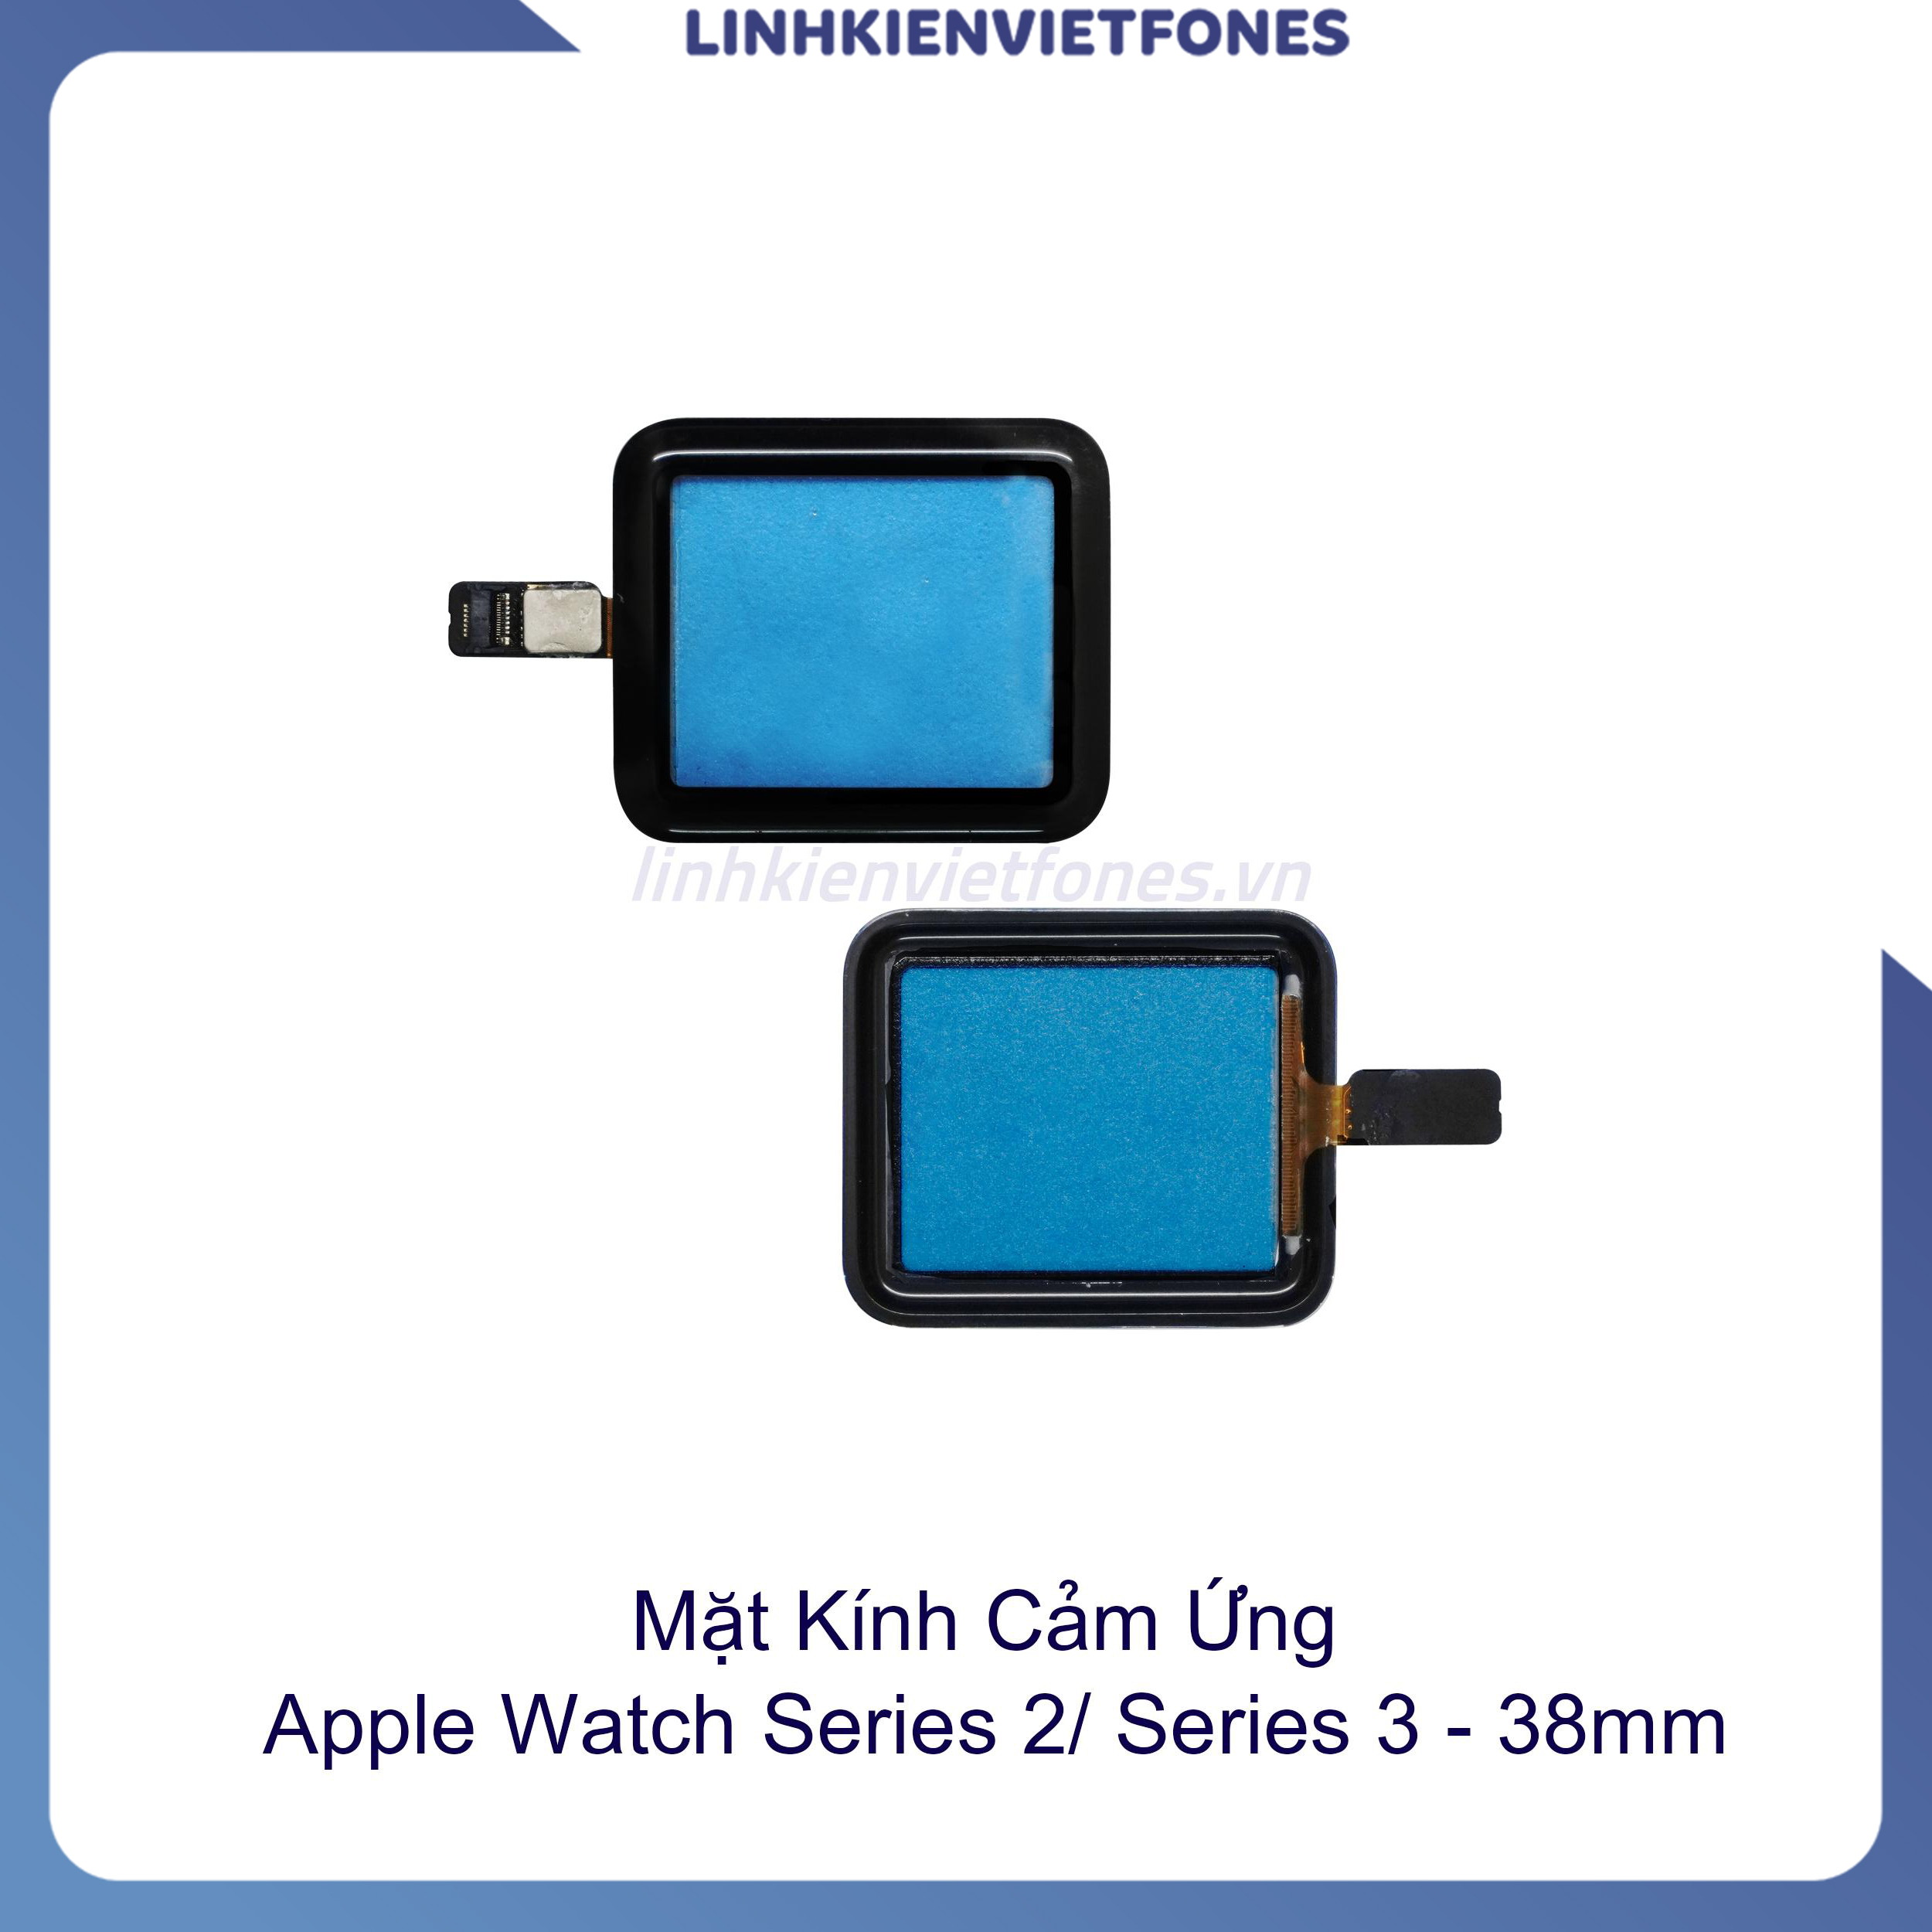 Mặt kính cảm ứng Apple watch SERI 2 / SERI 3 - 38mm - linhkienvietfones.vn